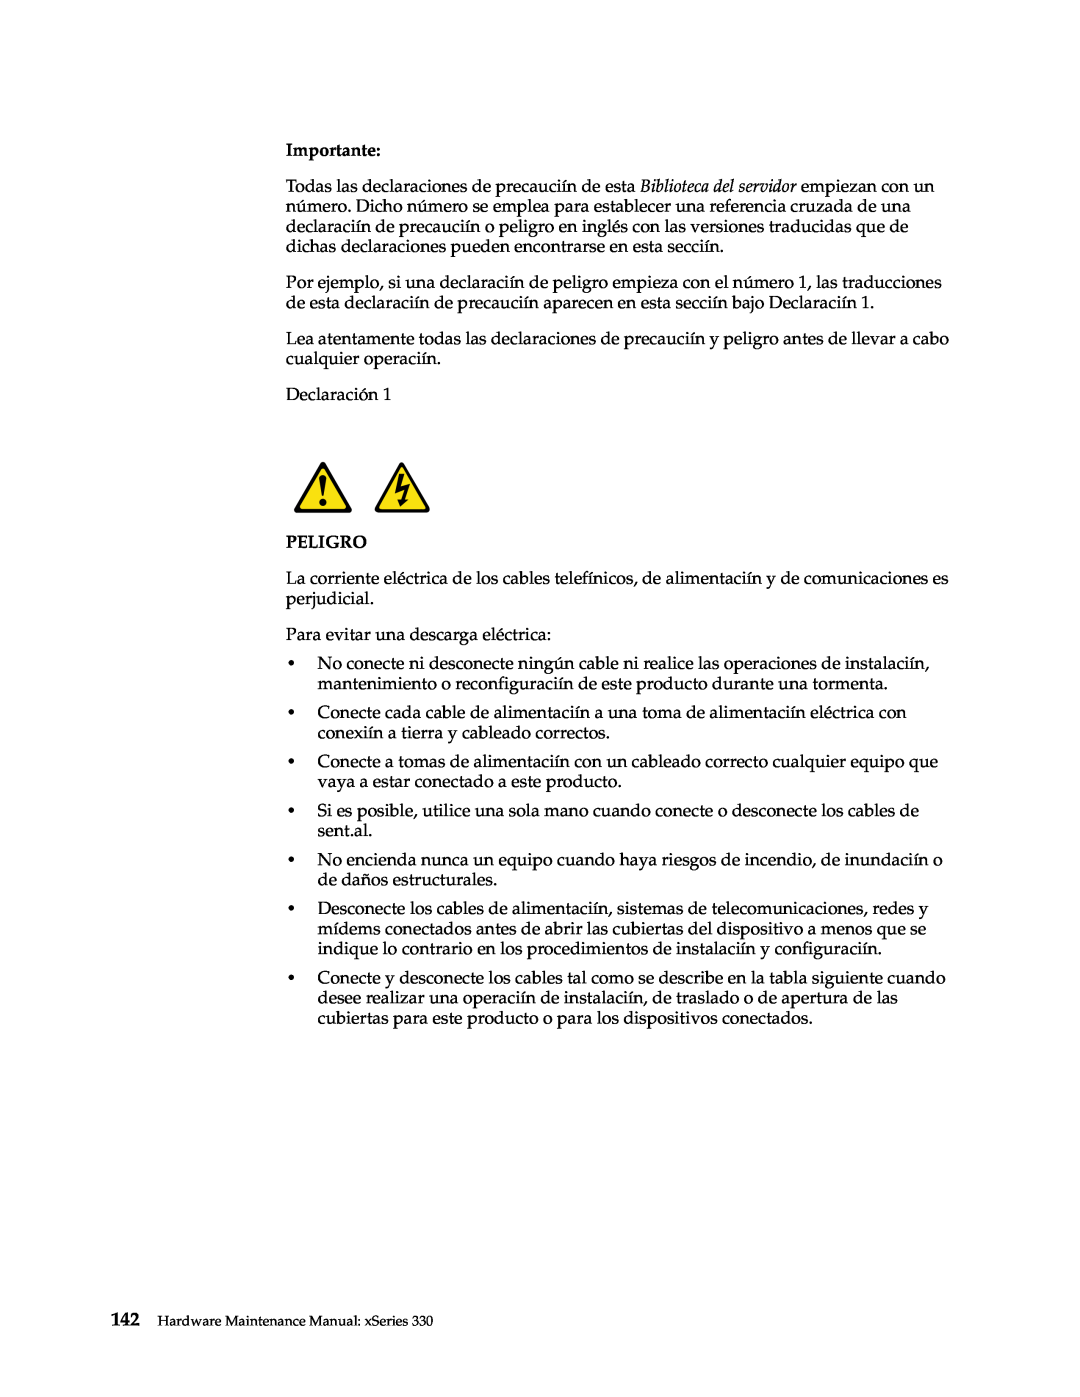 IBM xSeries 330 manual Peligro, Importante 